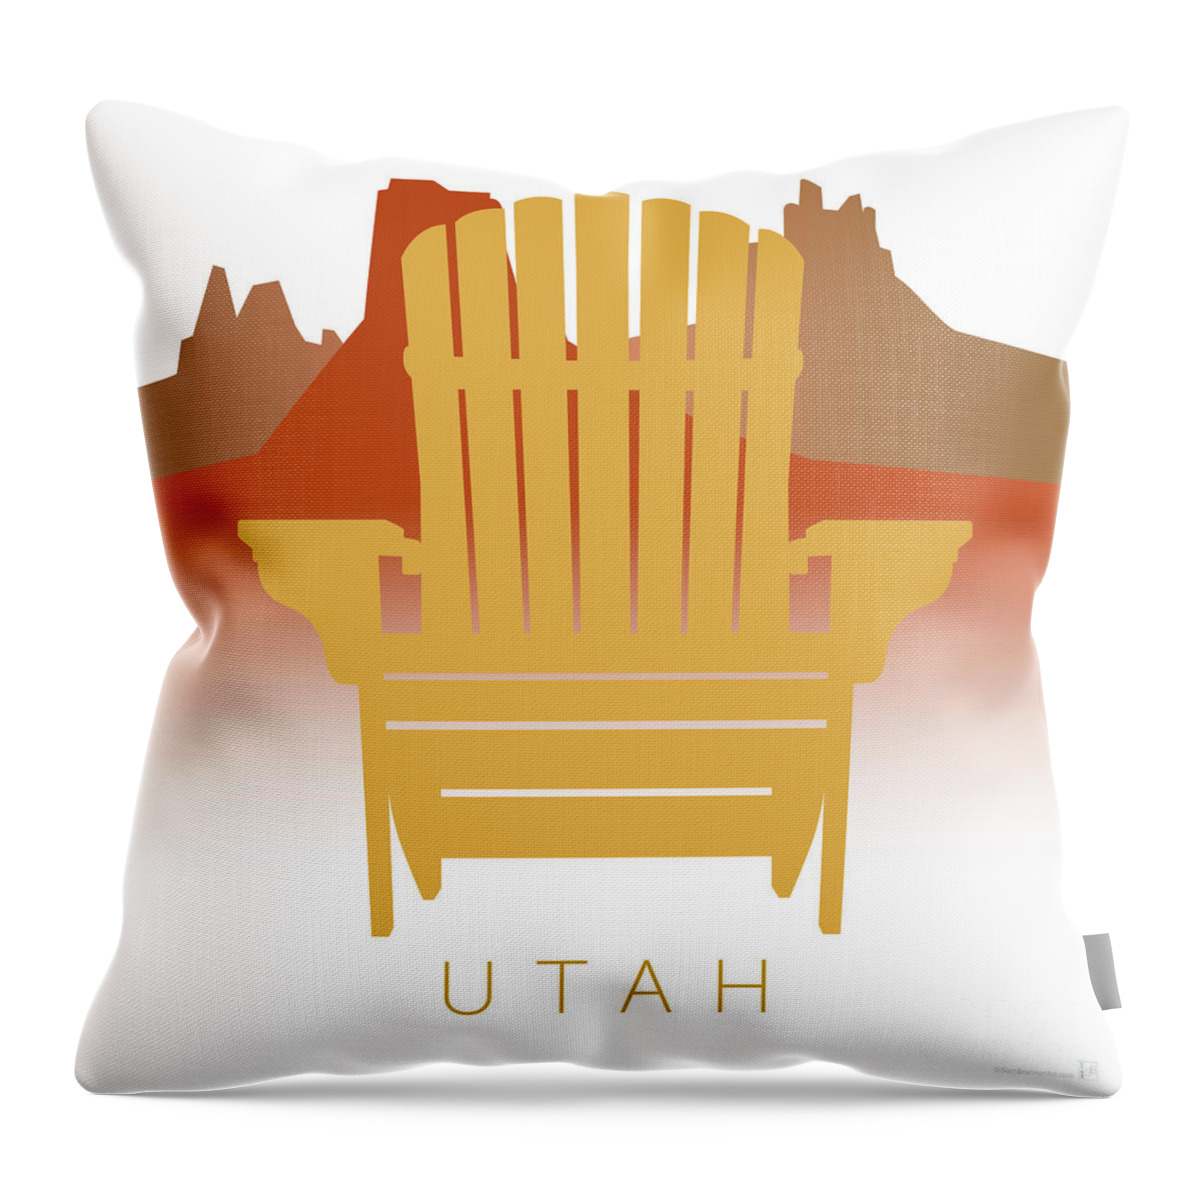 Utah Throw Pillow featuring the digital art Utah by Sam Brennan